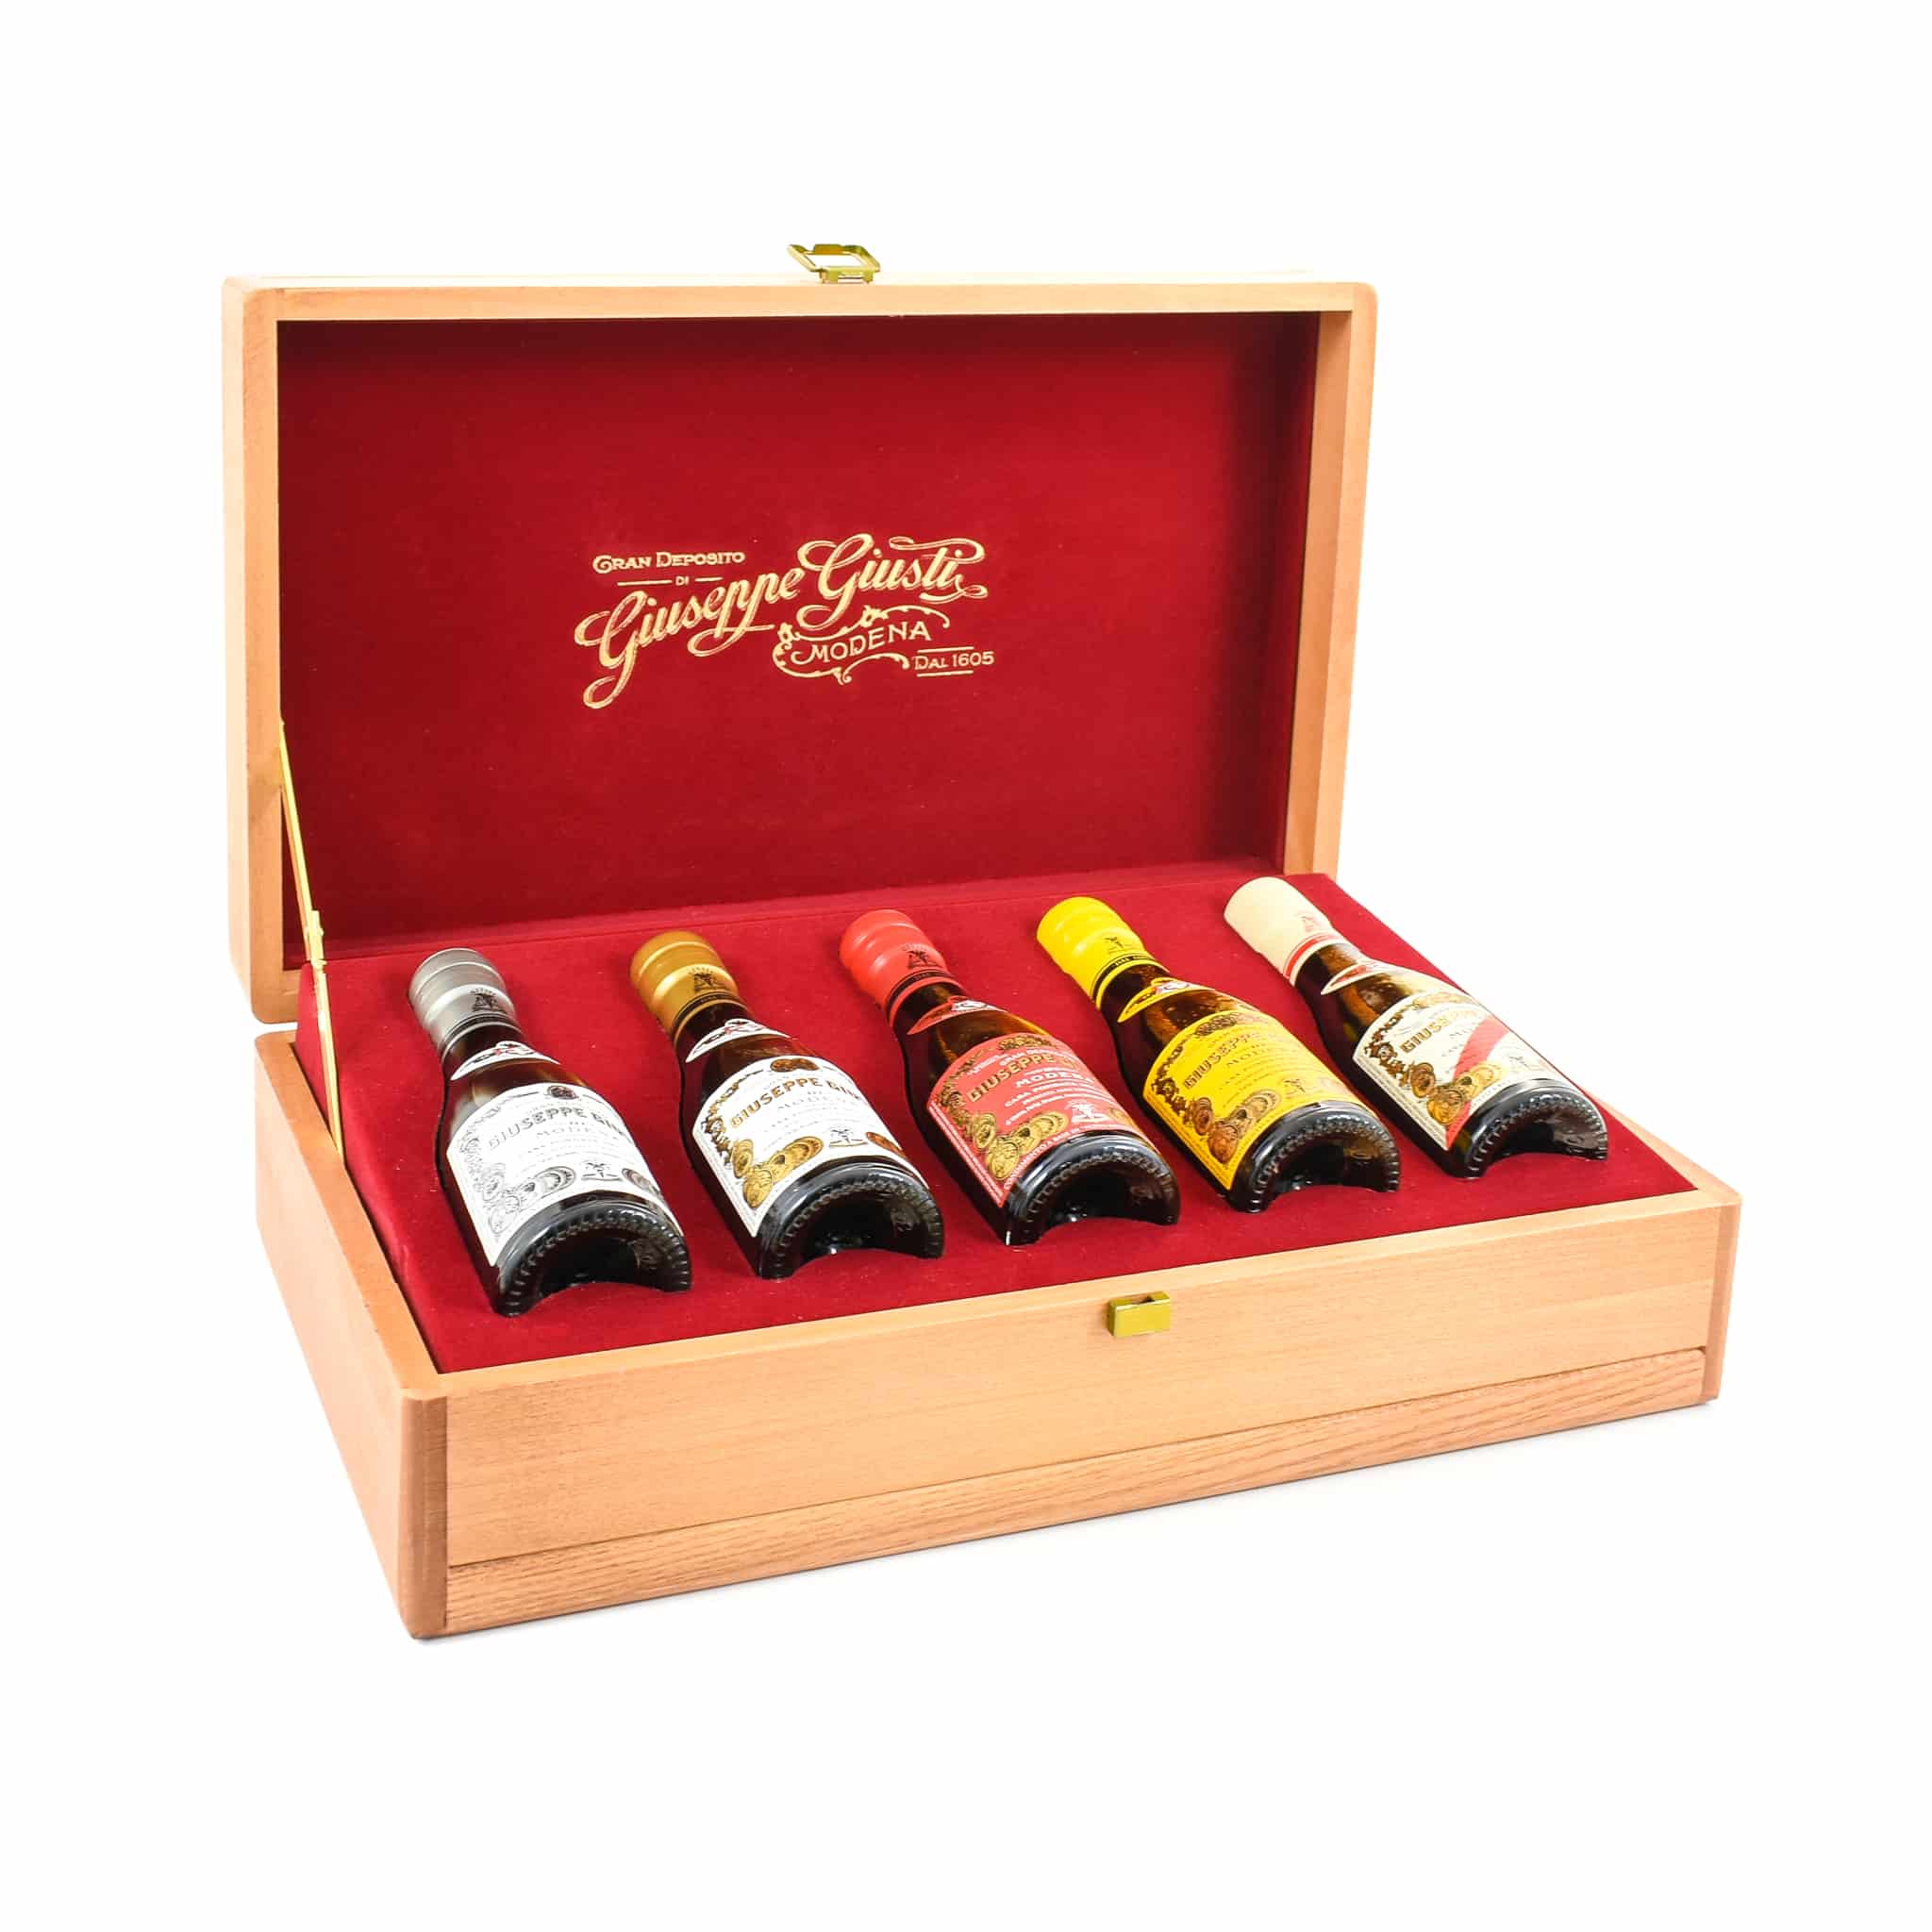 Giuseppe Giusti Balsamic Vinegar Historical Collection in Wooden Casket